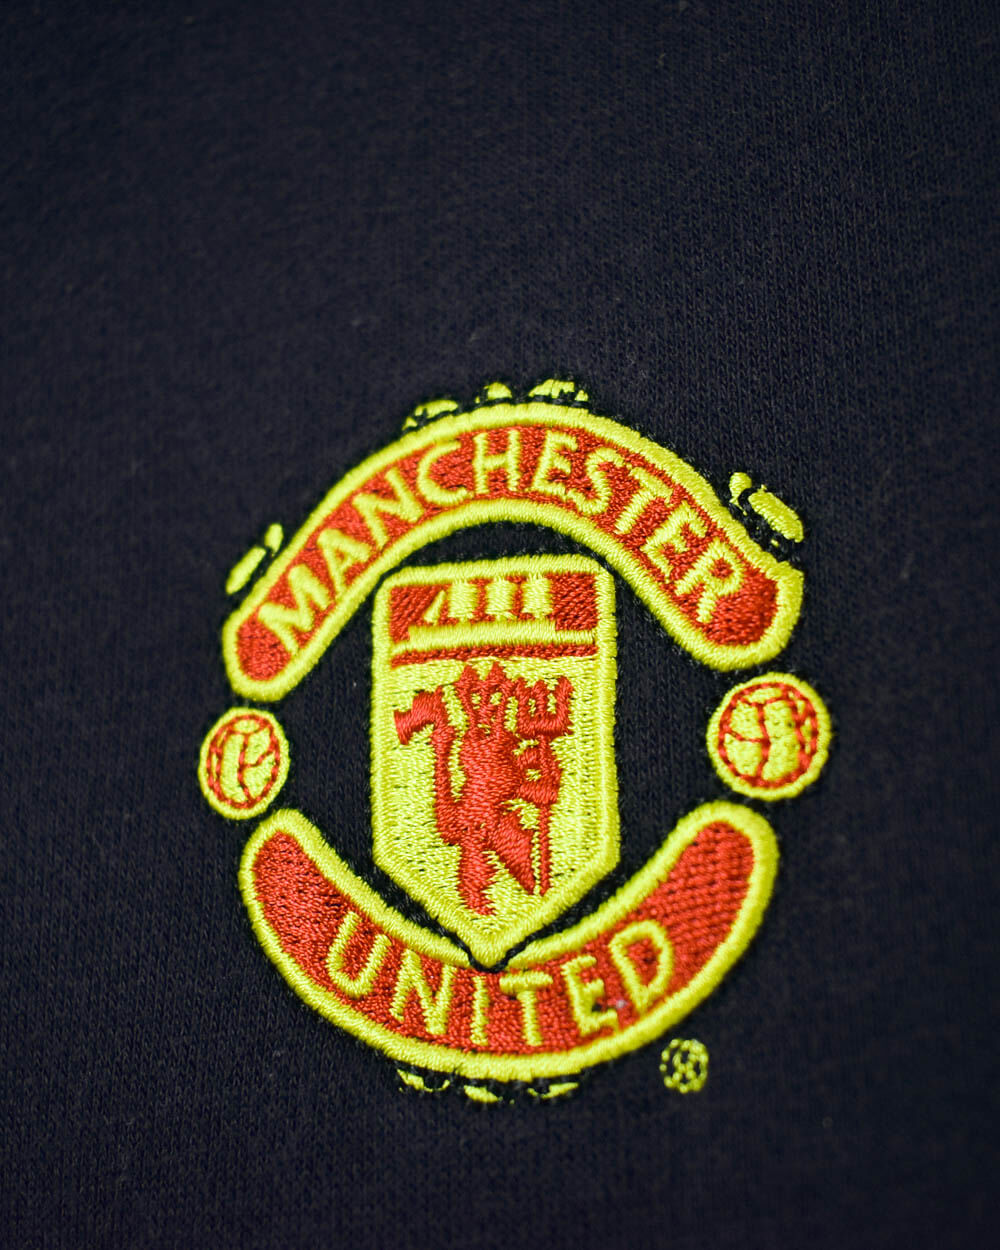 Black Nike Manchester United Hoodie - Medium